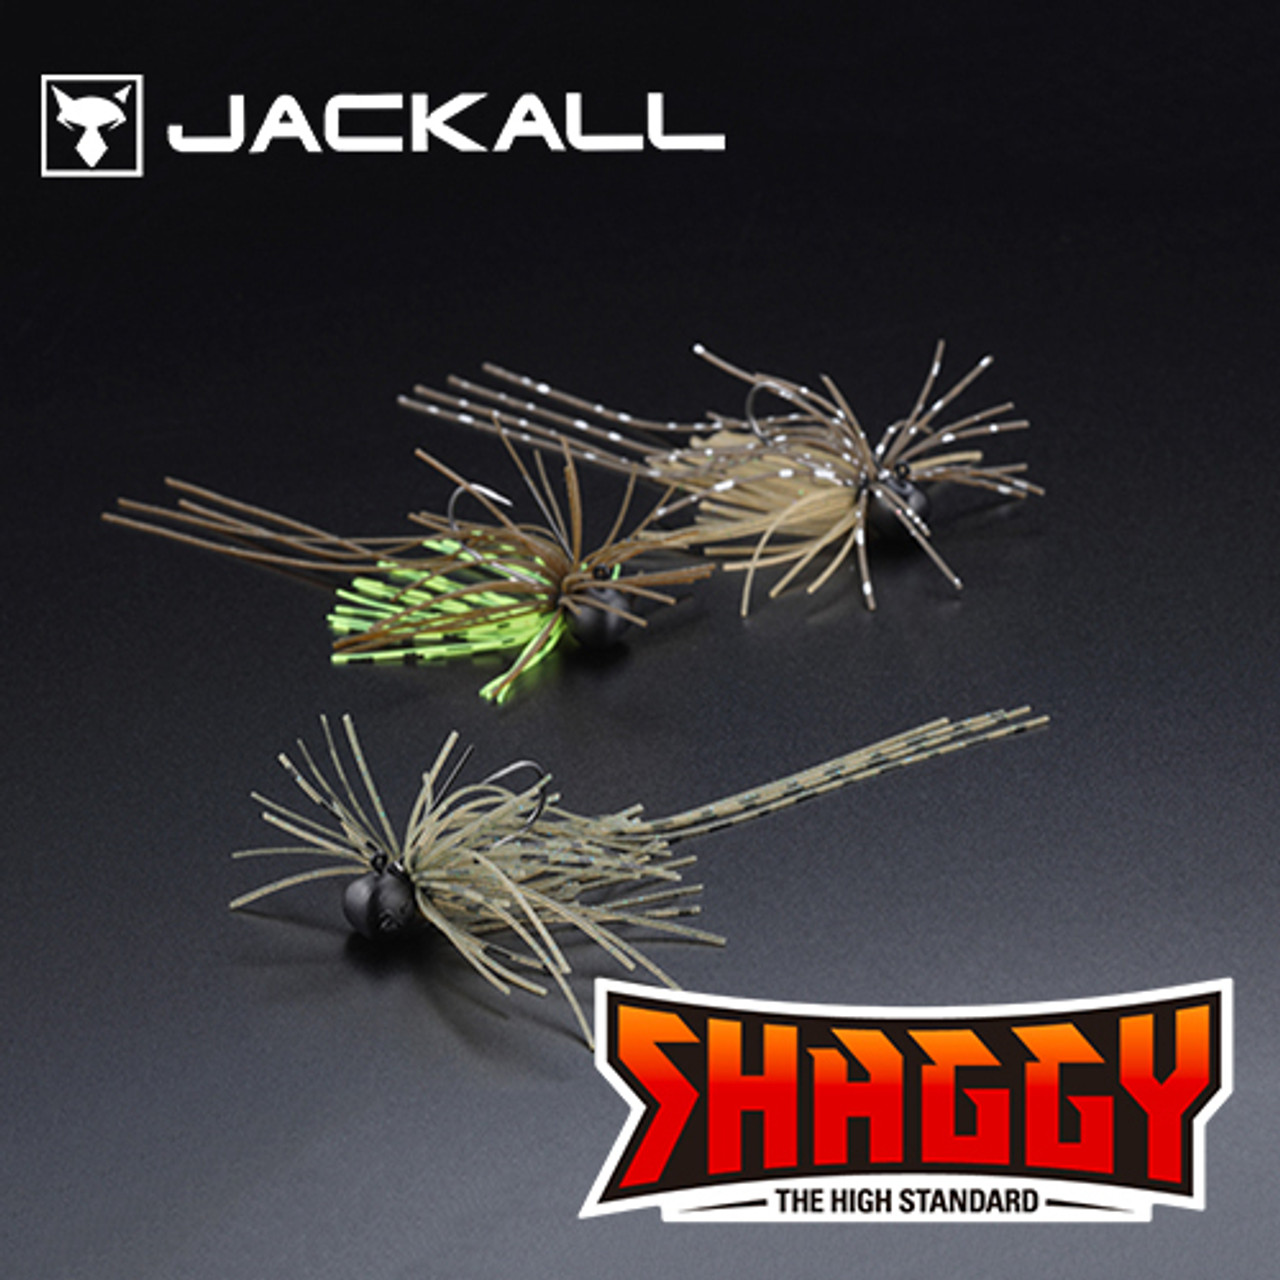 Jackall SHAGGY Small Rubber Jig 1.8g (1/16oz) NEW